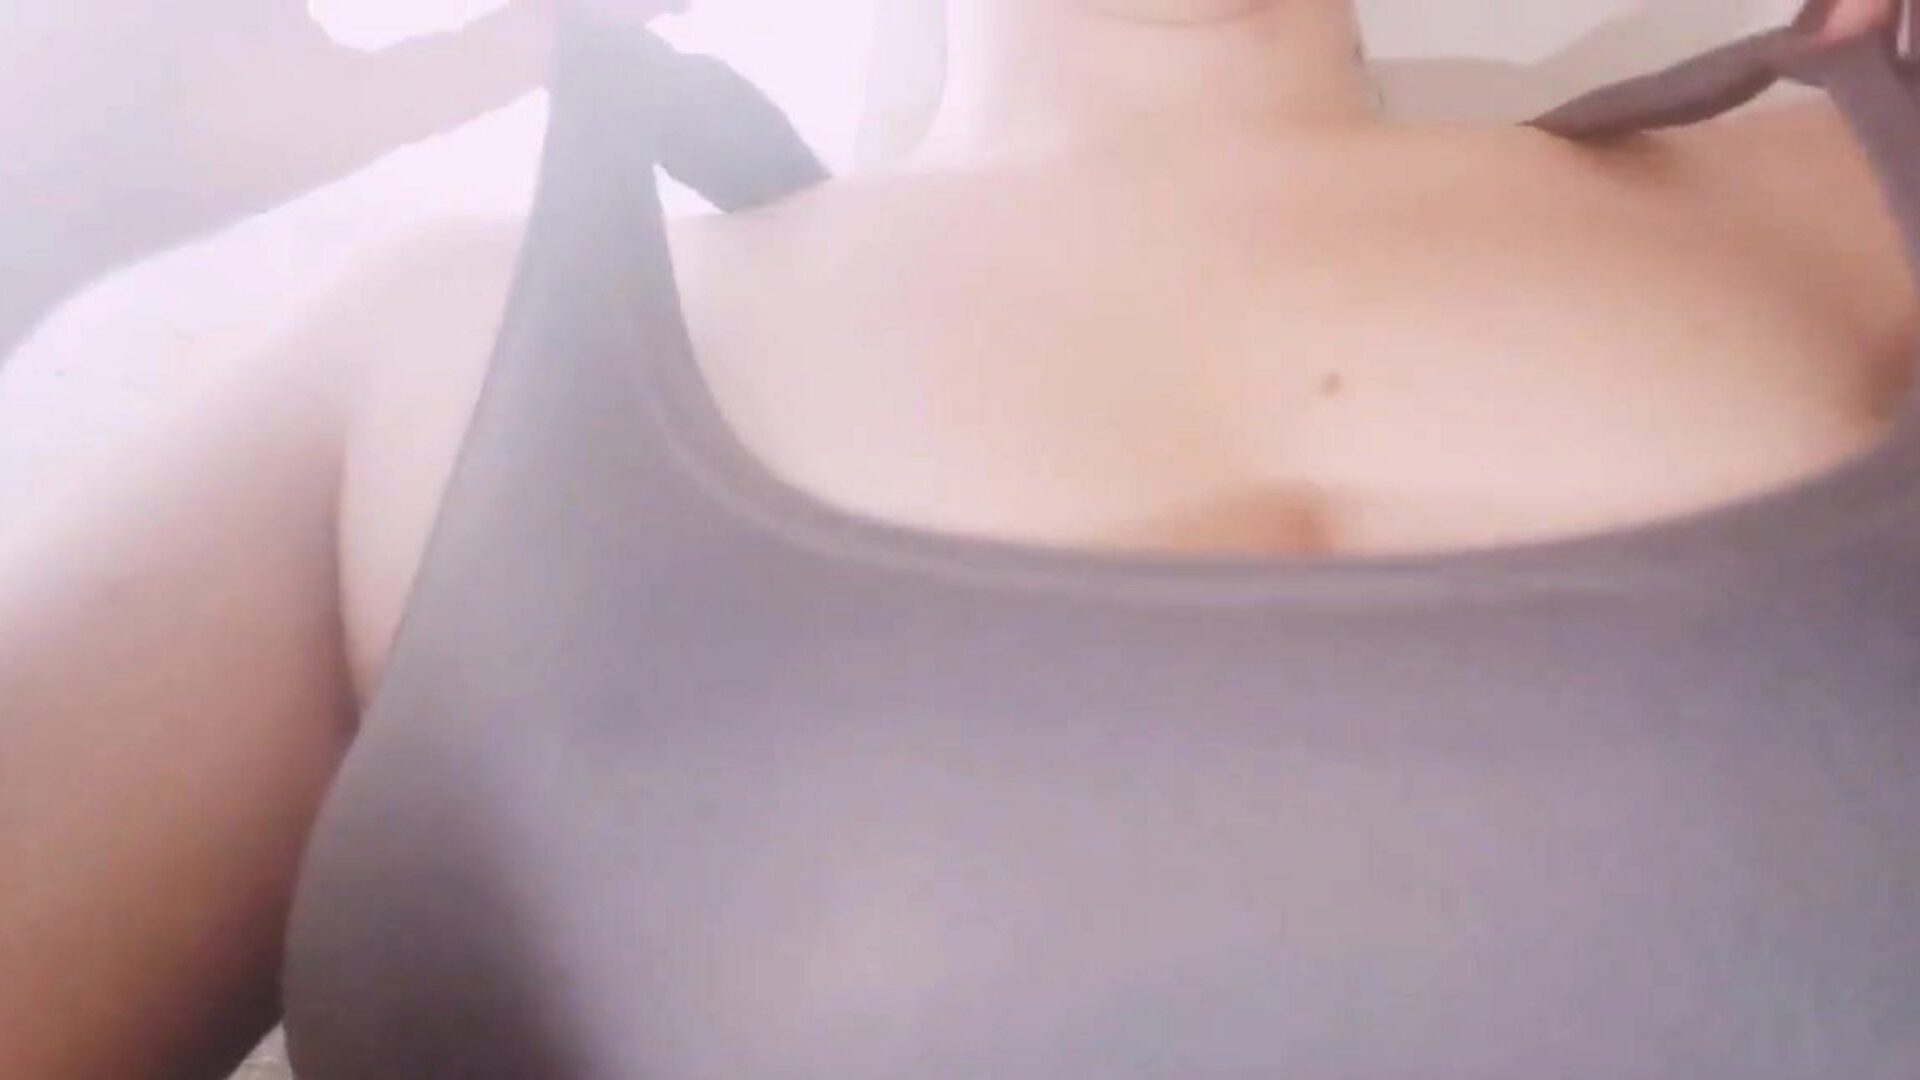 naughty brazilian woman showing off big boobs: free porno f5 watch nezbedná brazilian woman showing off big boobs epizoda na xhamster - konečný výběr nových nových velkých prsa a zdarma prsa epizody HD pornografie trubice